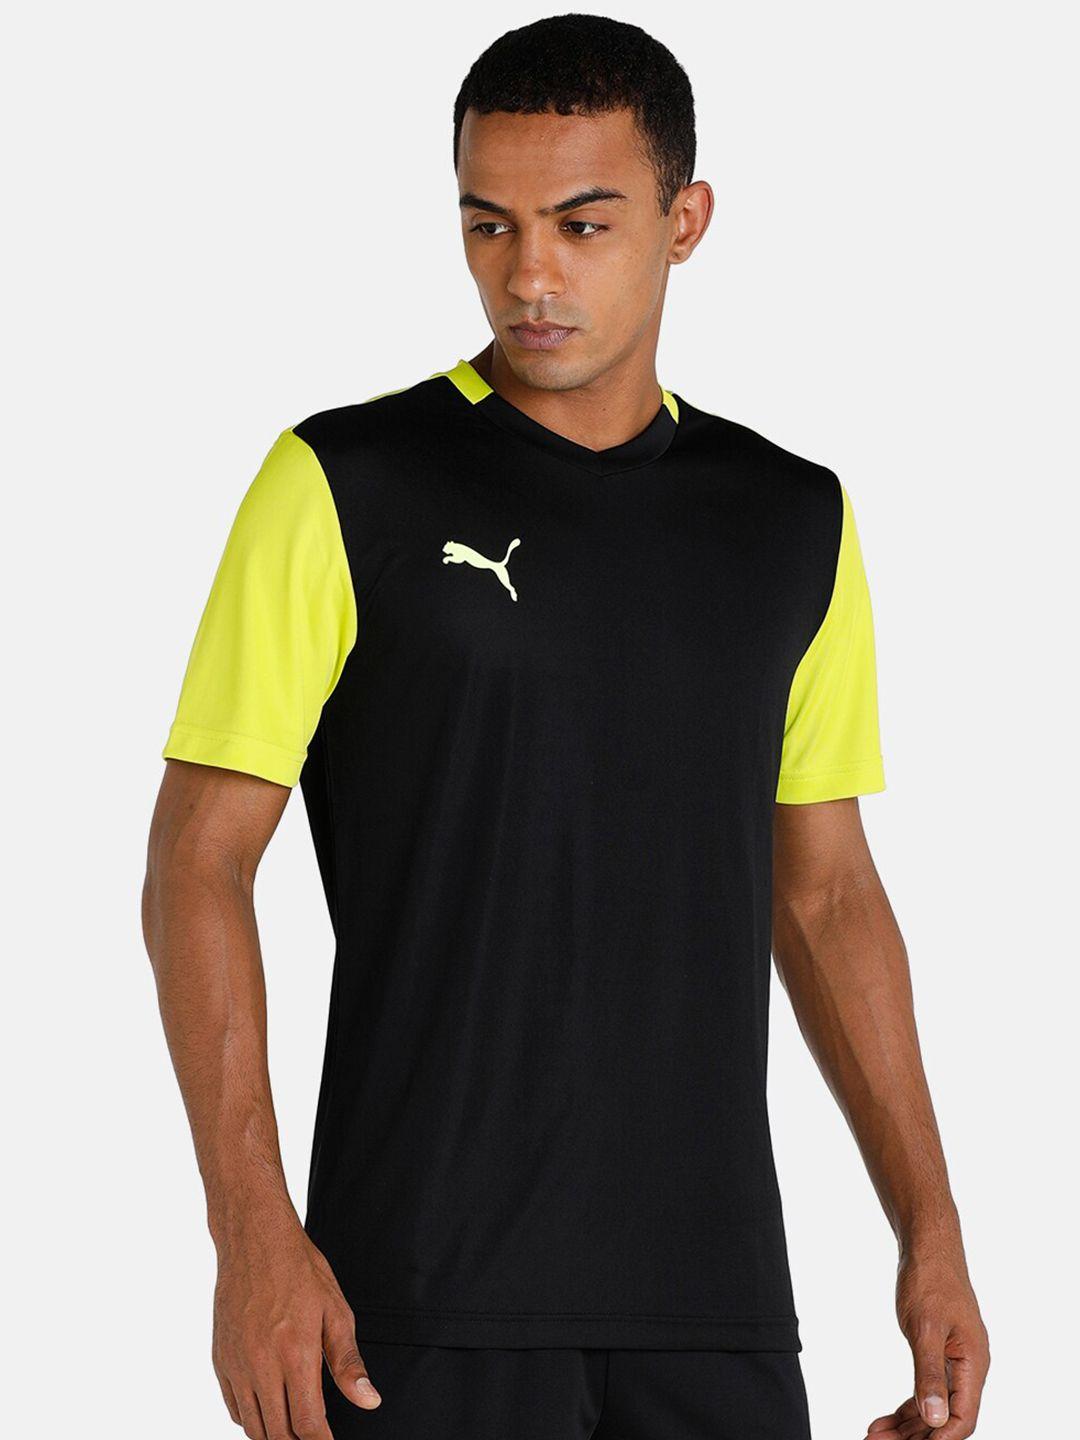 puma-men-black-&-yellow-colourblocked-v-neck-drycell-outdoor-t-shirt